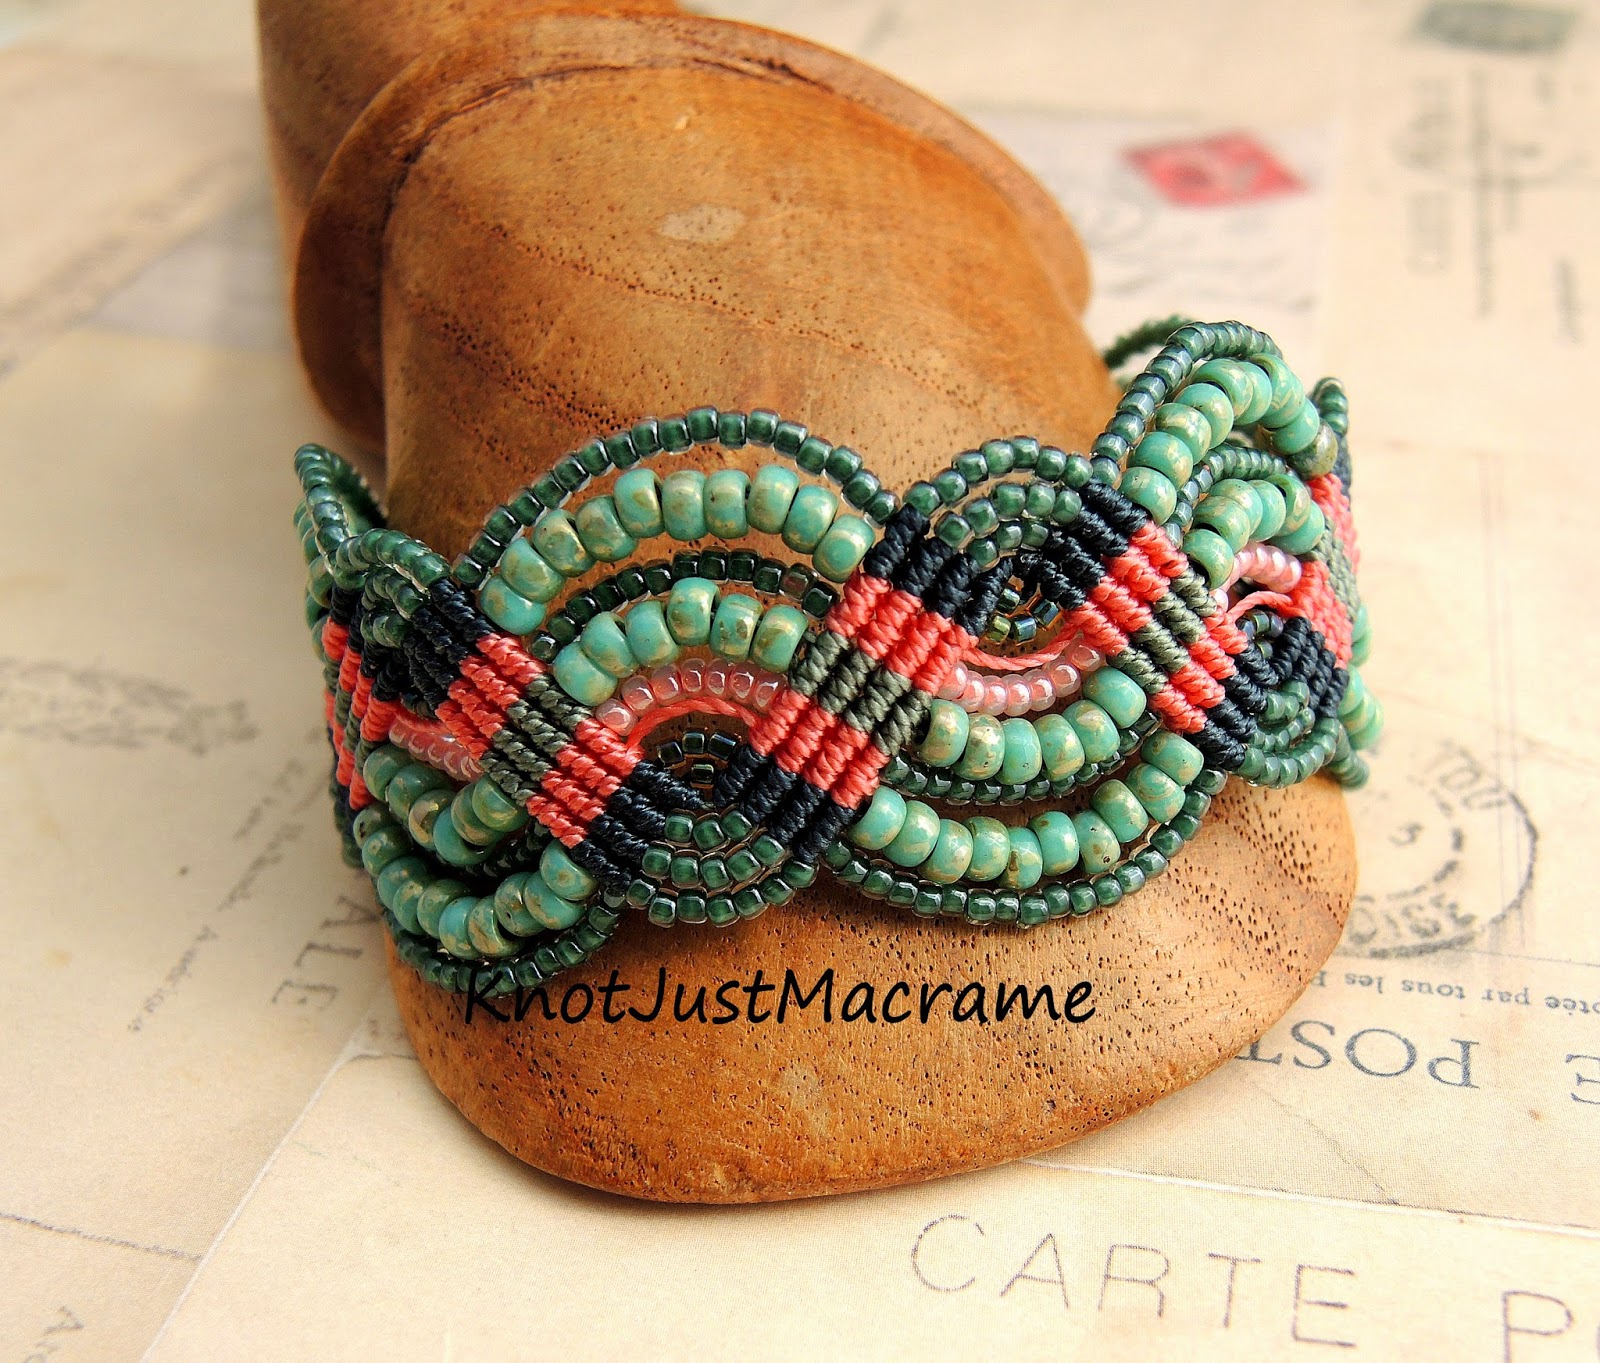 Knot Just Macrame by Sherri Stokey: Matubo Beads and Micro Macrame